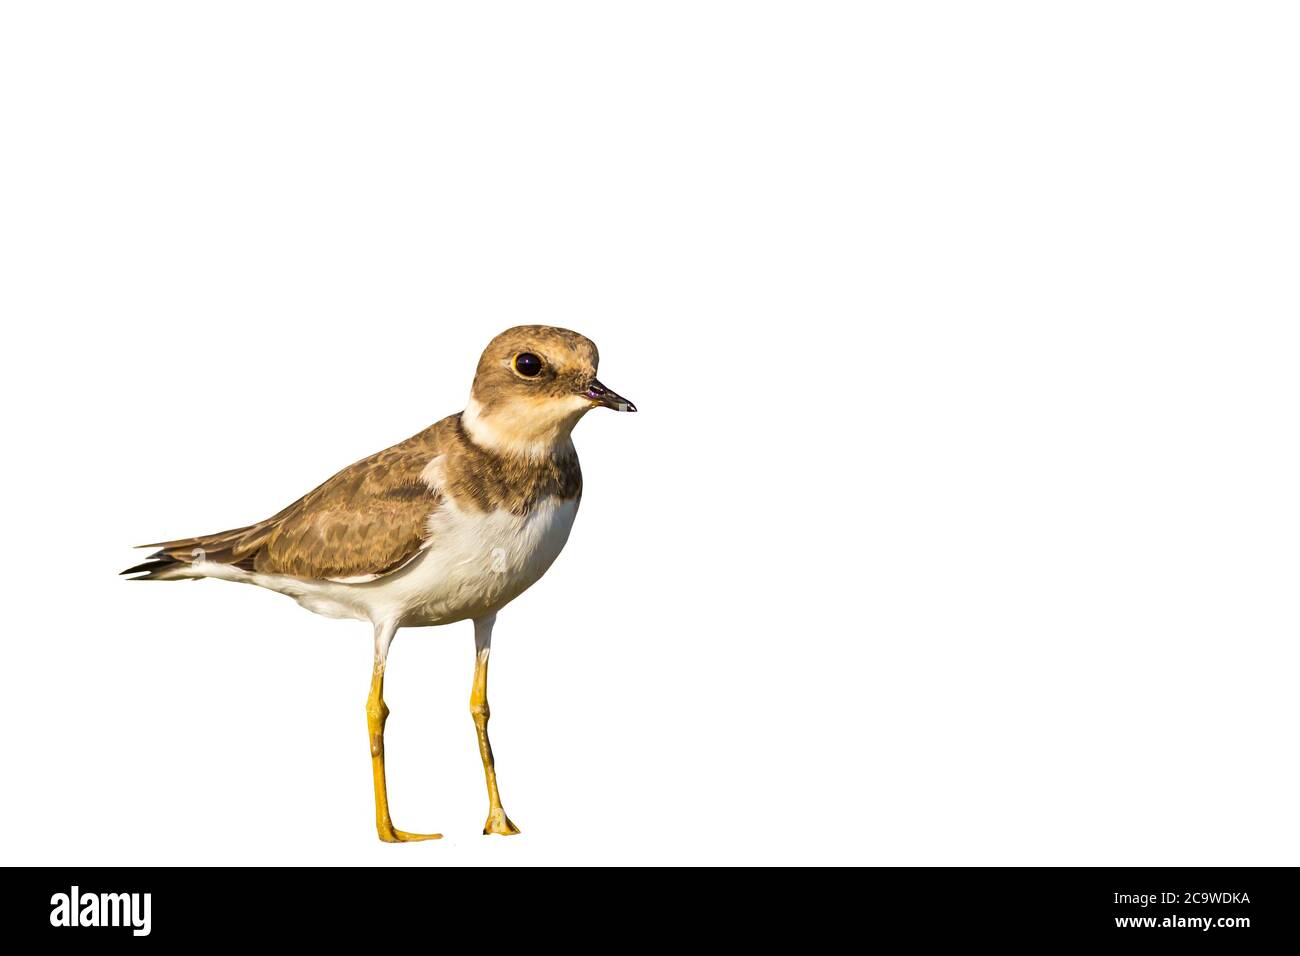 Isolated cute bird. White background. Bird: Kentish Plover. Stock Photo